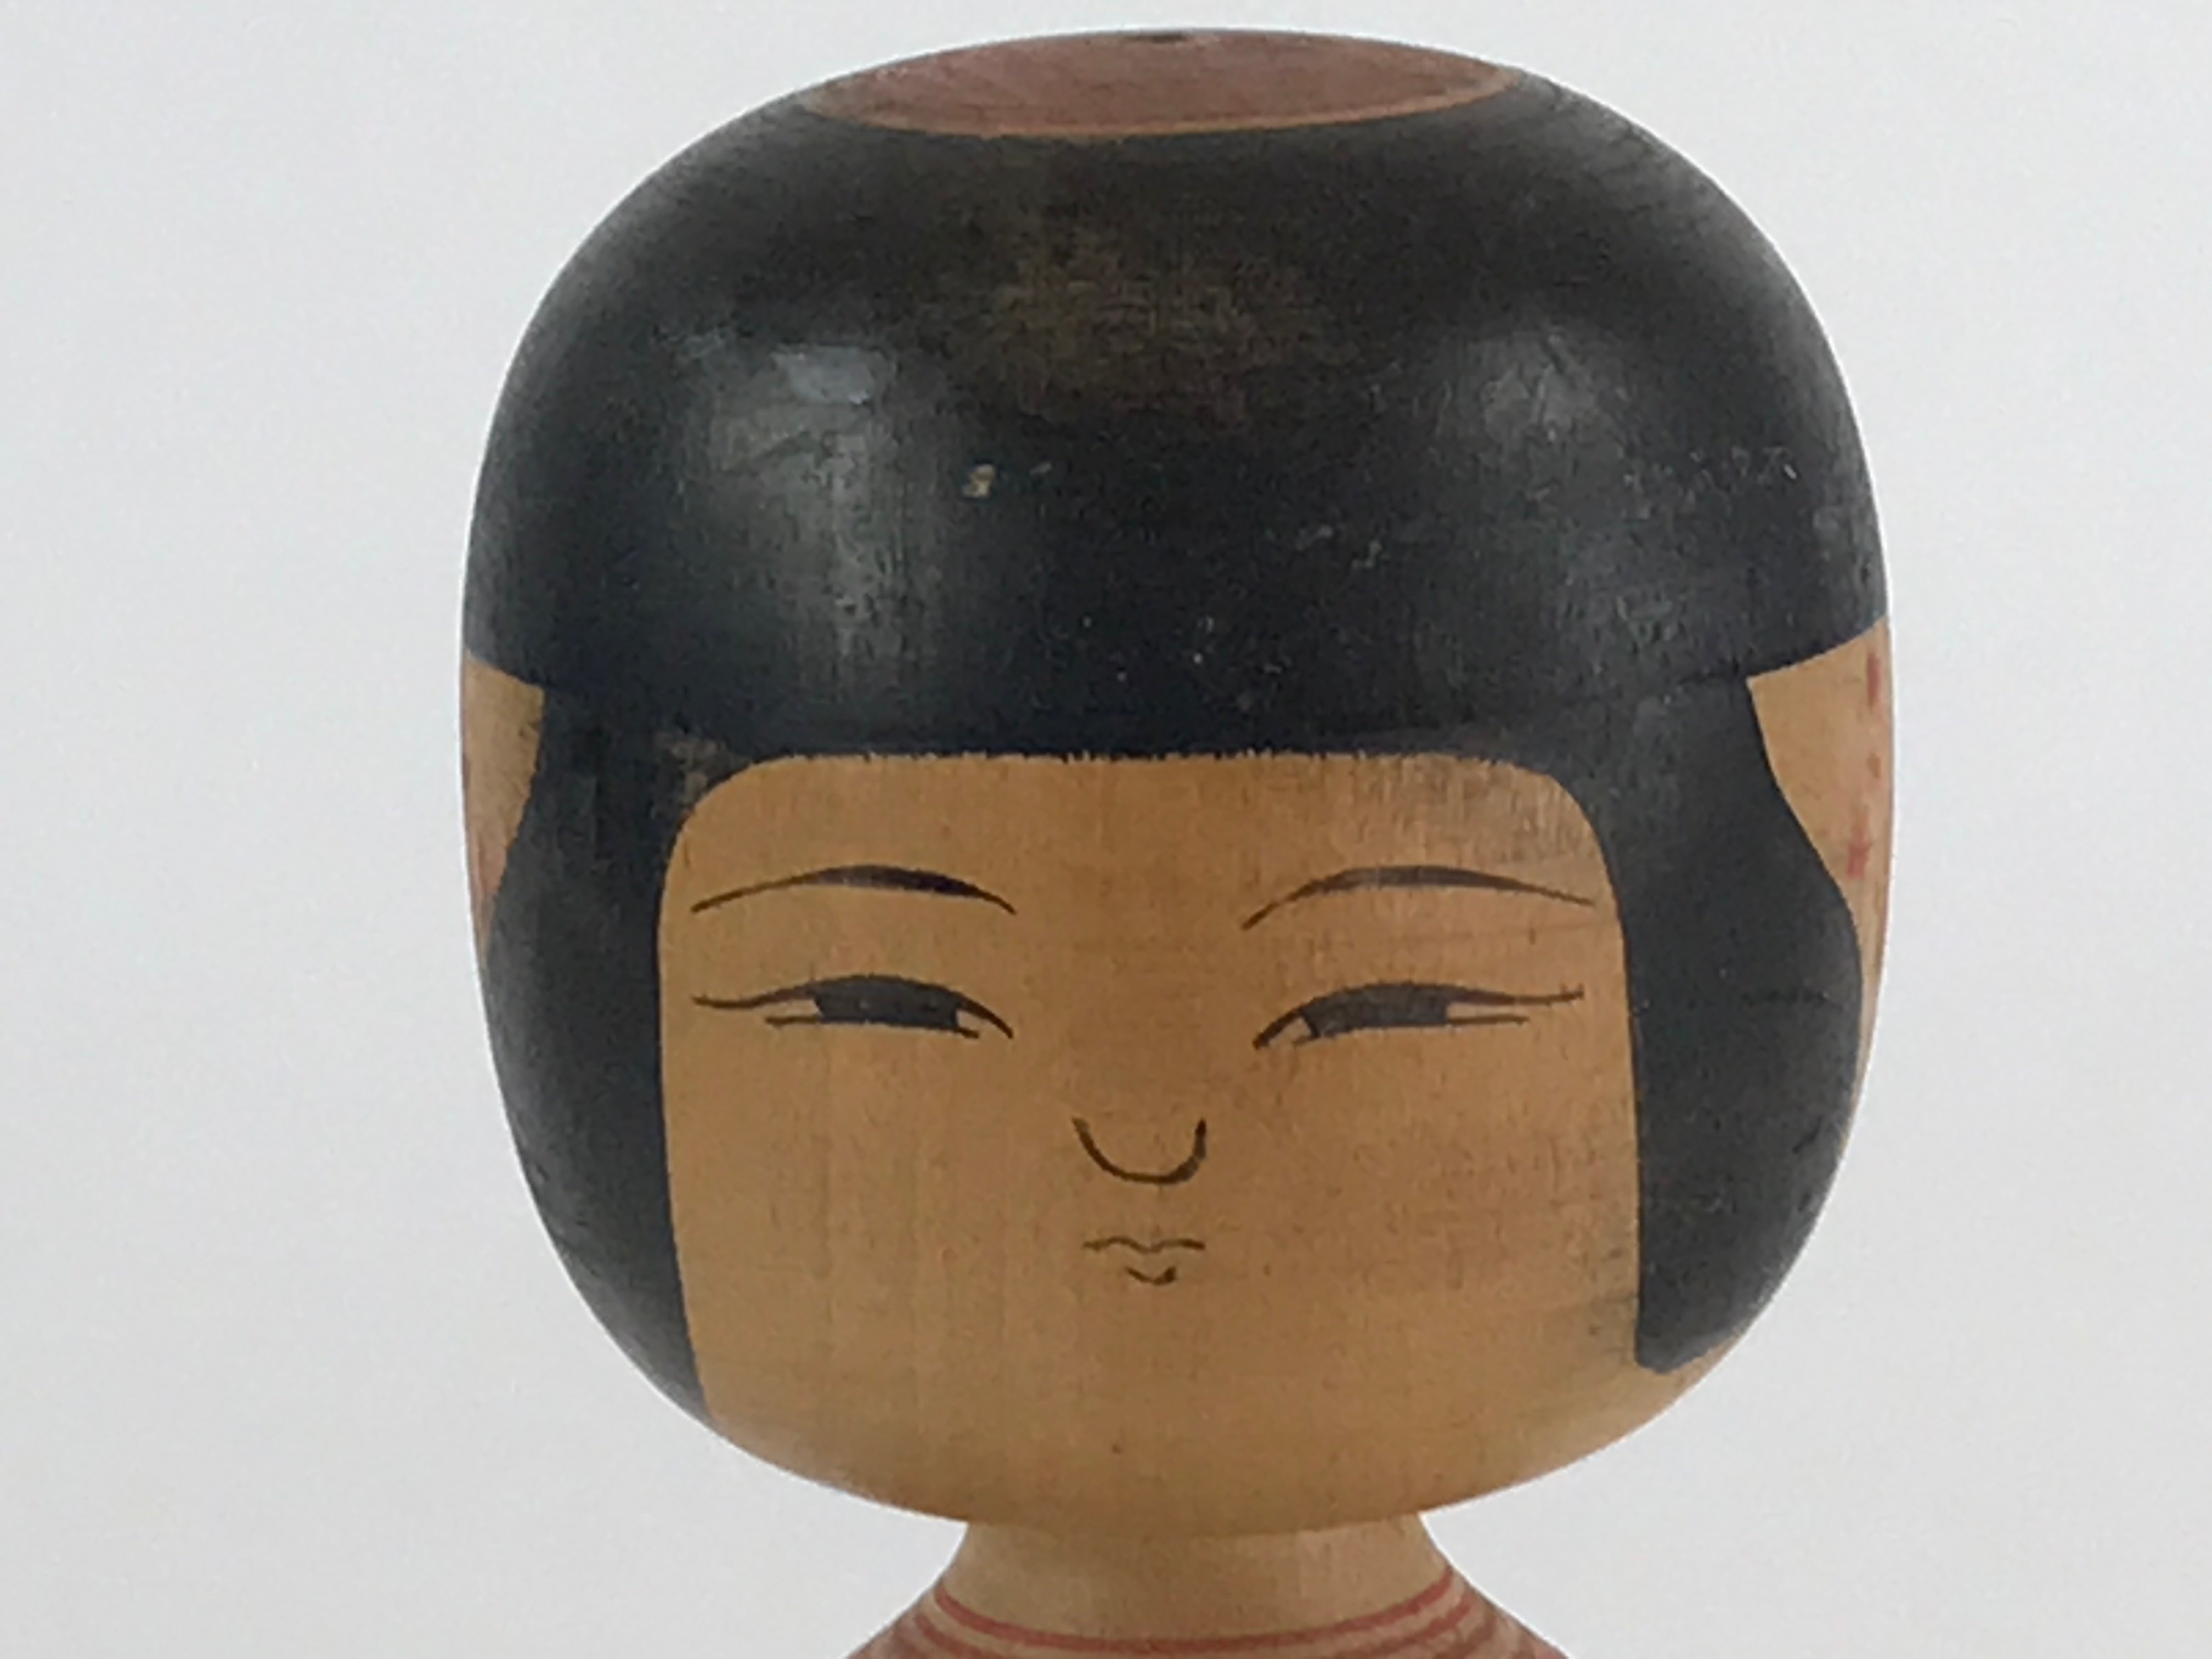 Japanese Wooden Kokeshi Doll Vtg Figurine Traditional Craft Toy KF606